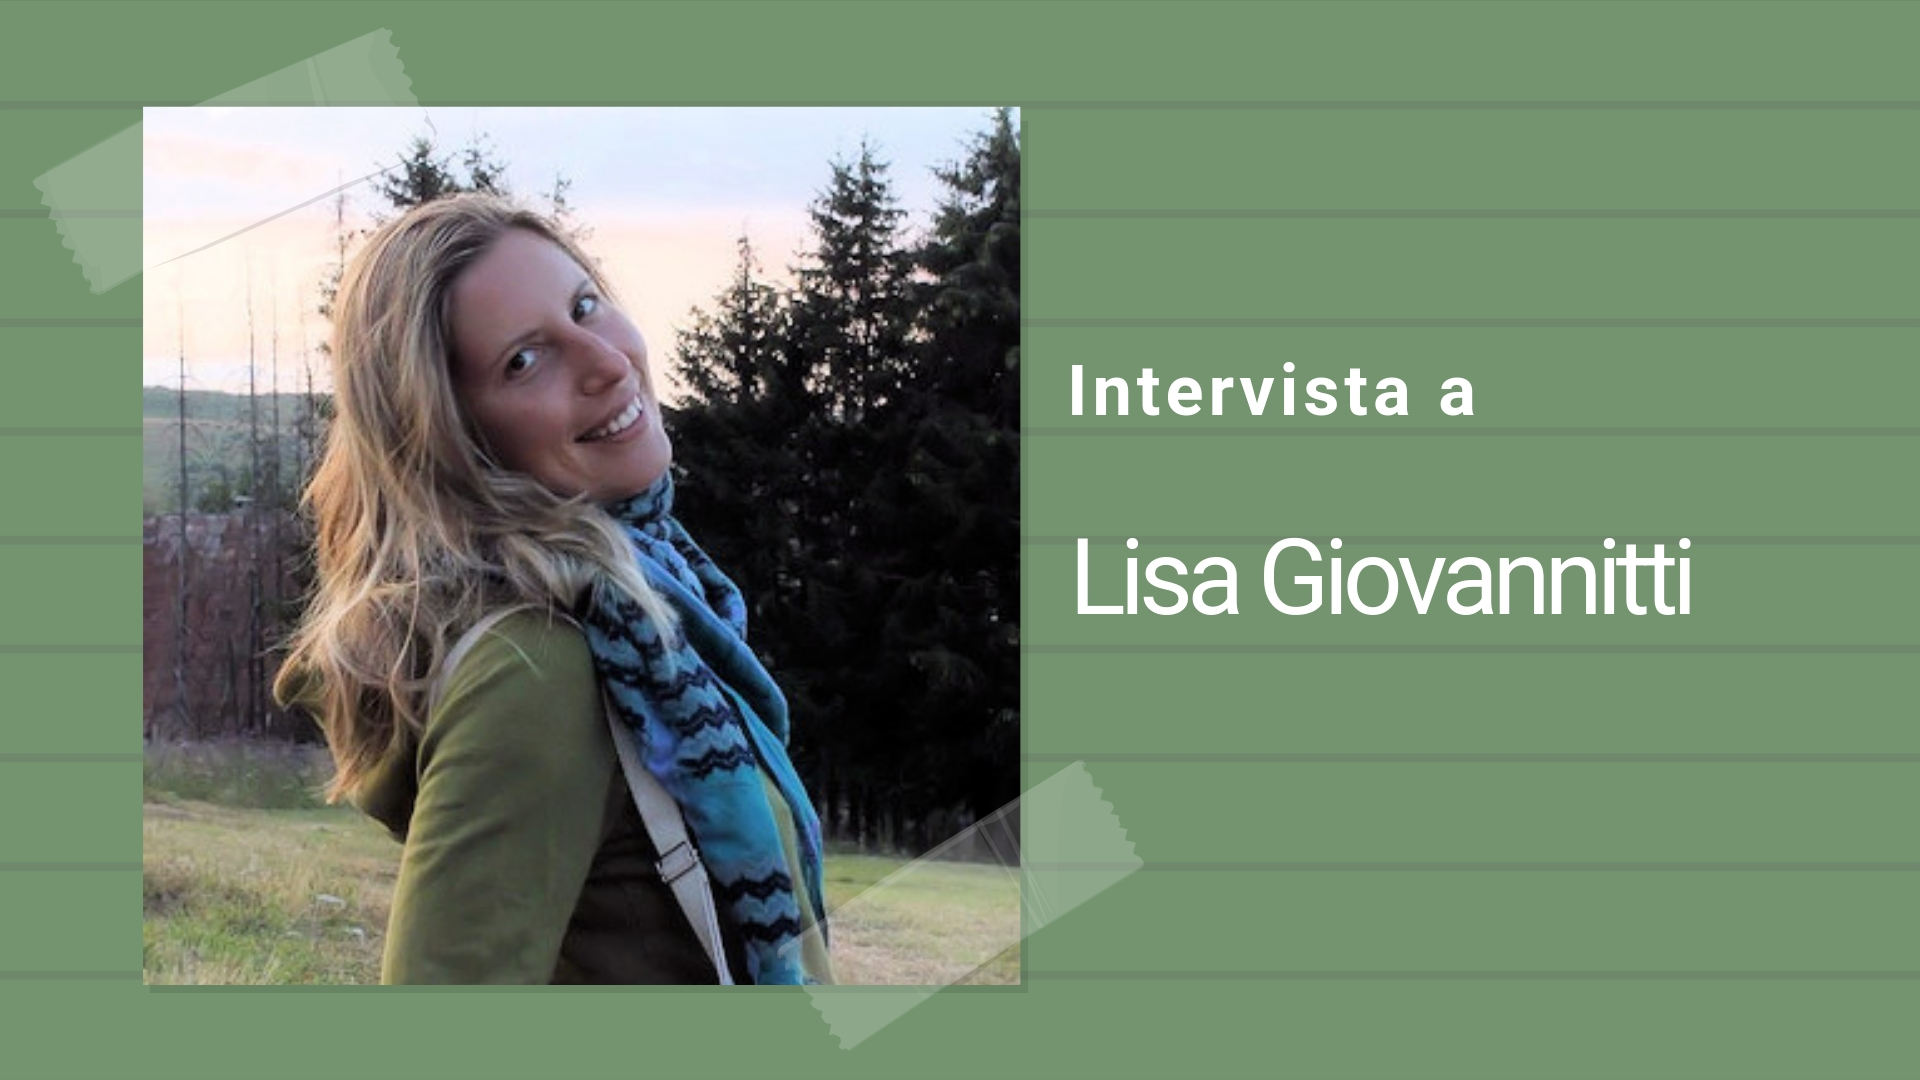 Intervista a Lisa Giovannitti, International Orientation – Luiss